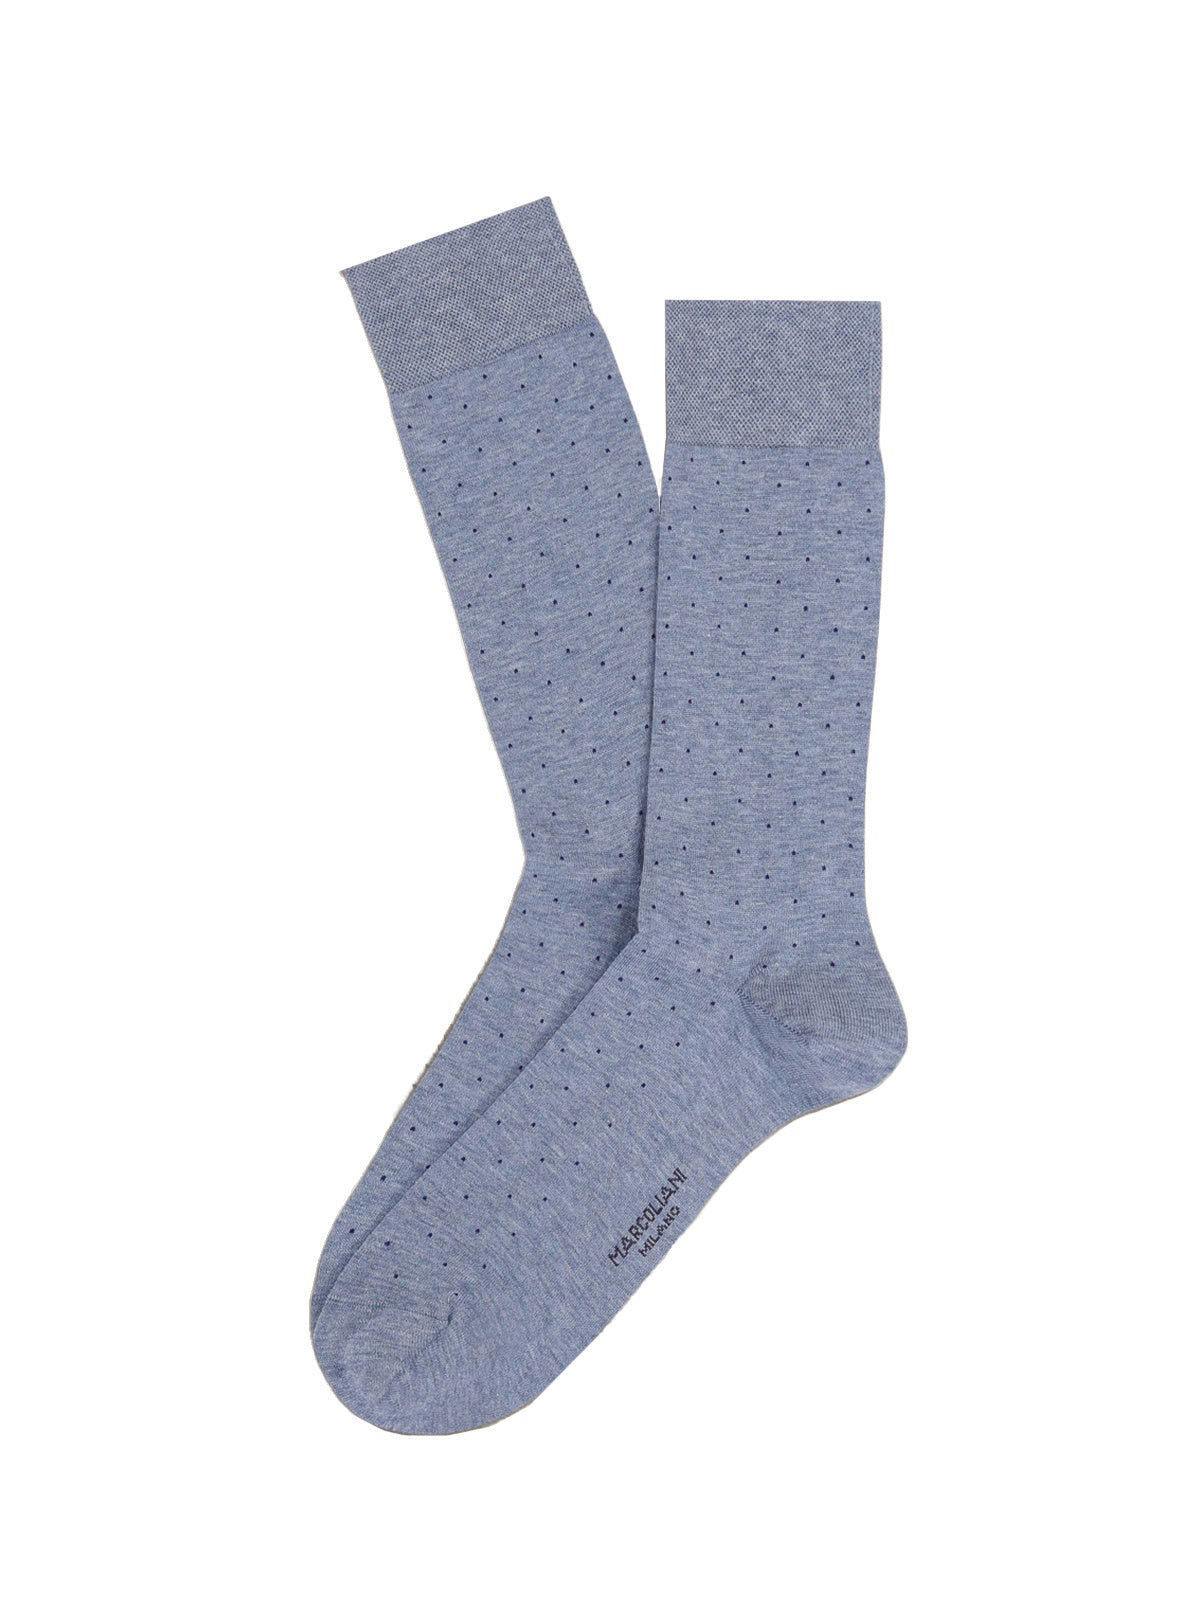 Argyle Slate Blue Dress Socks, Cotton Socks